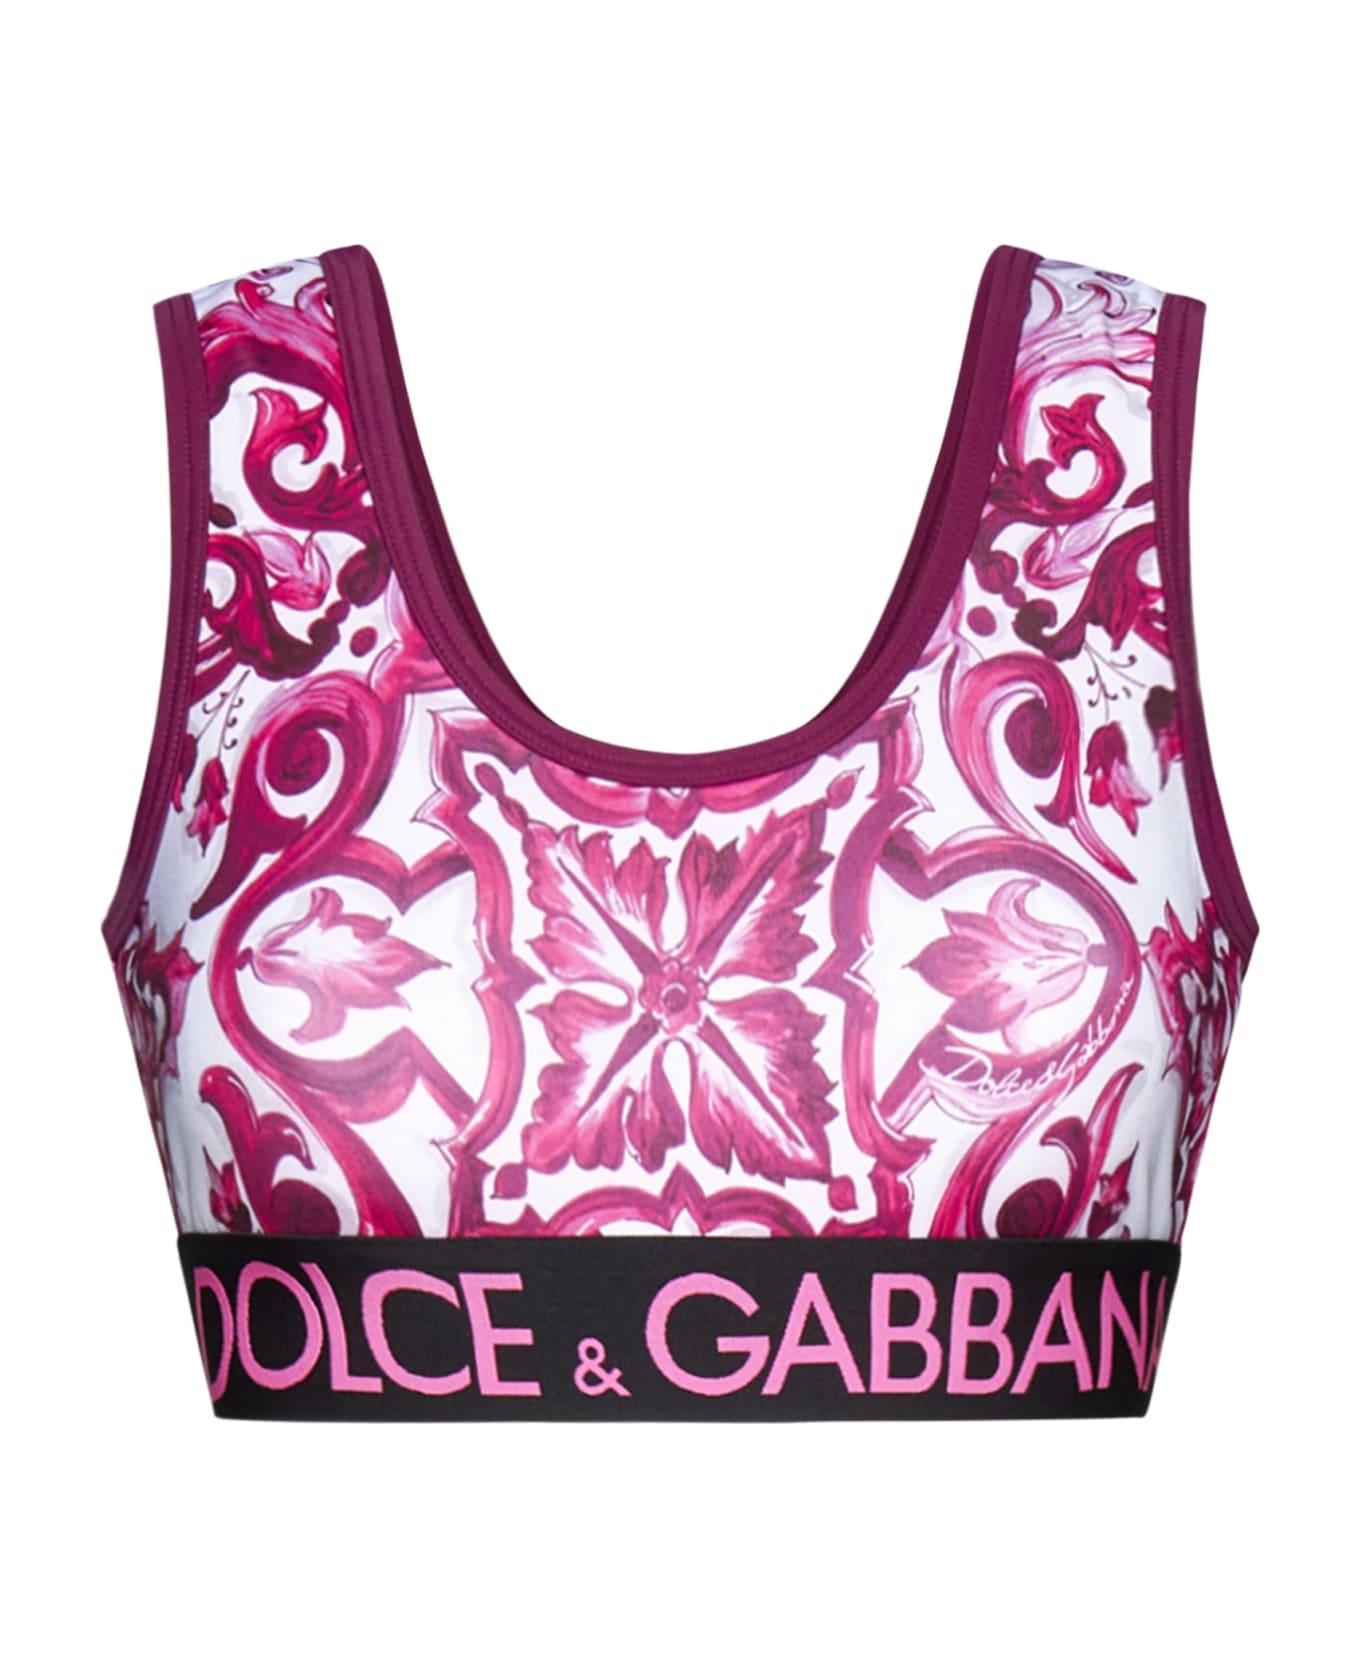 Dolce & Gabbana Technical Jersey Top - Maiolica 1 Fuxia